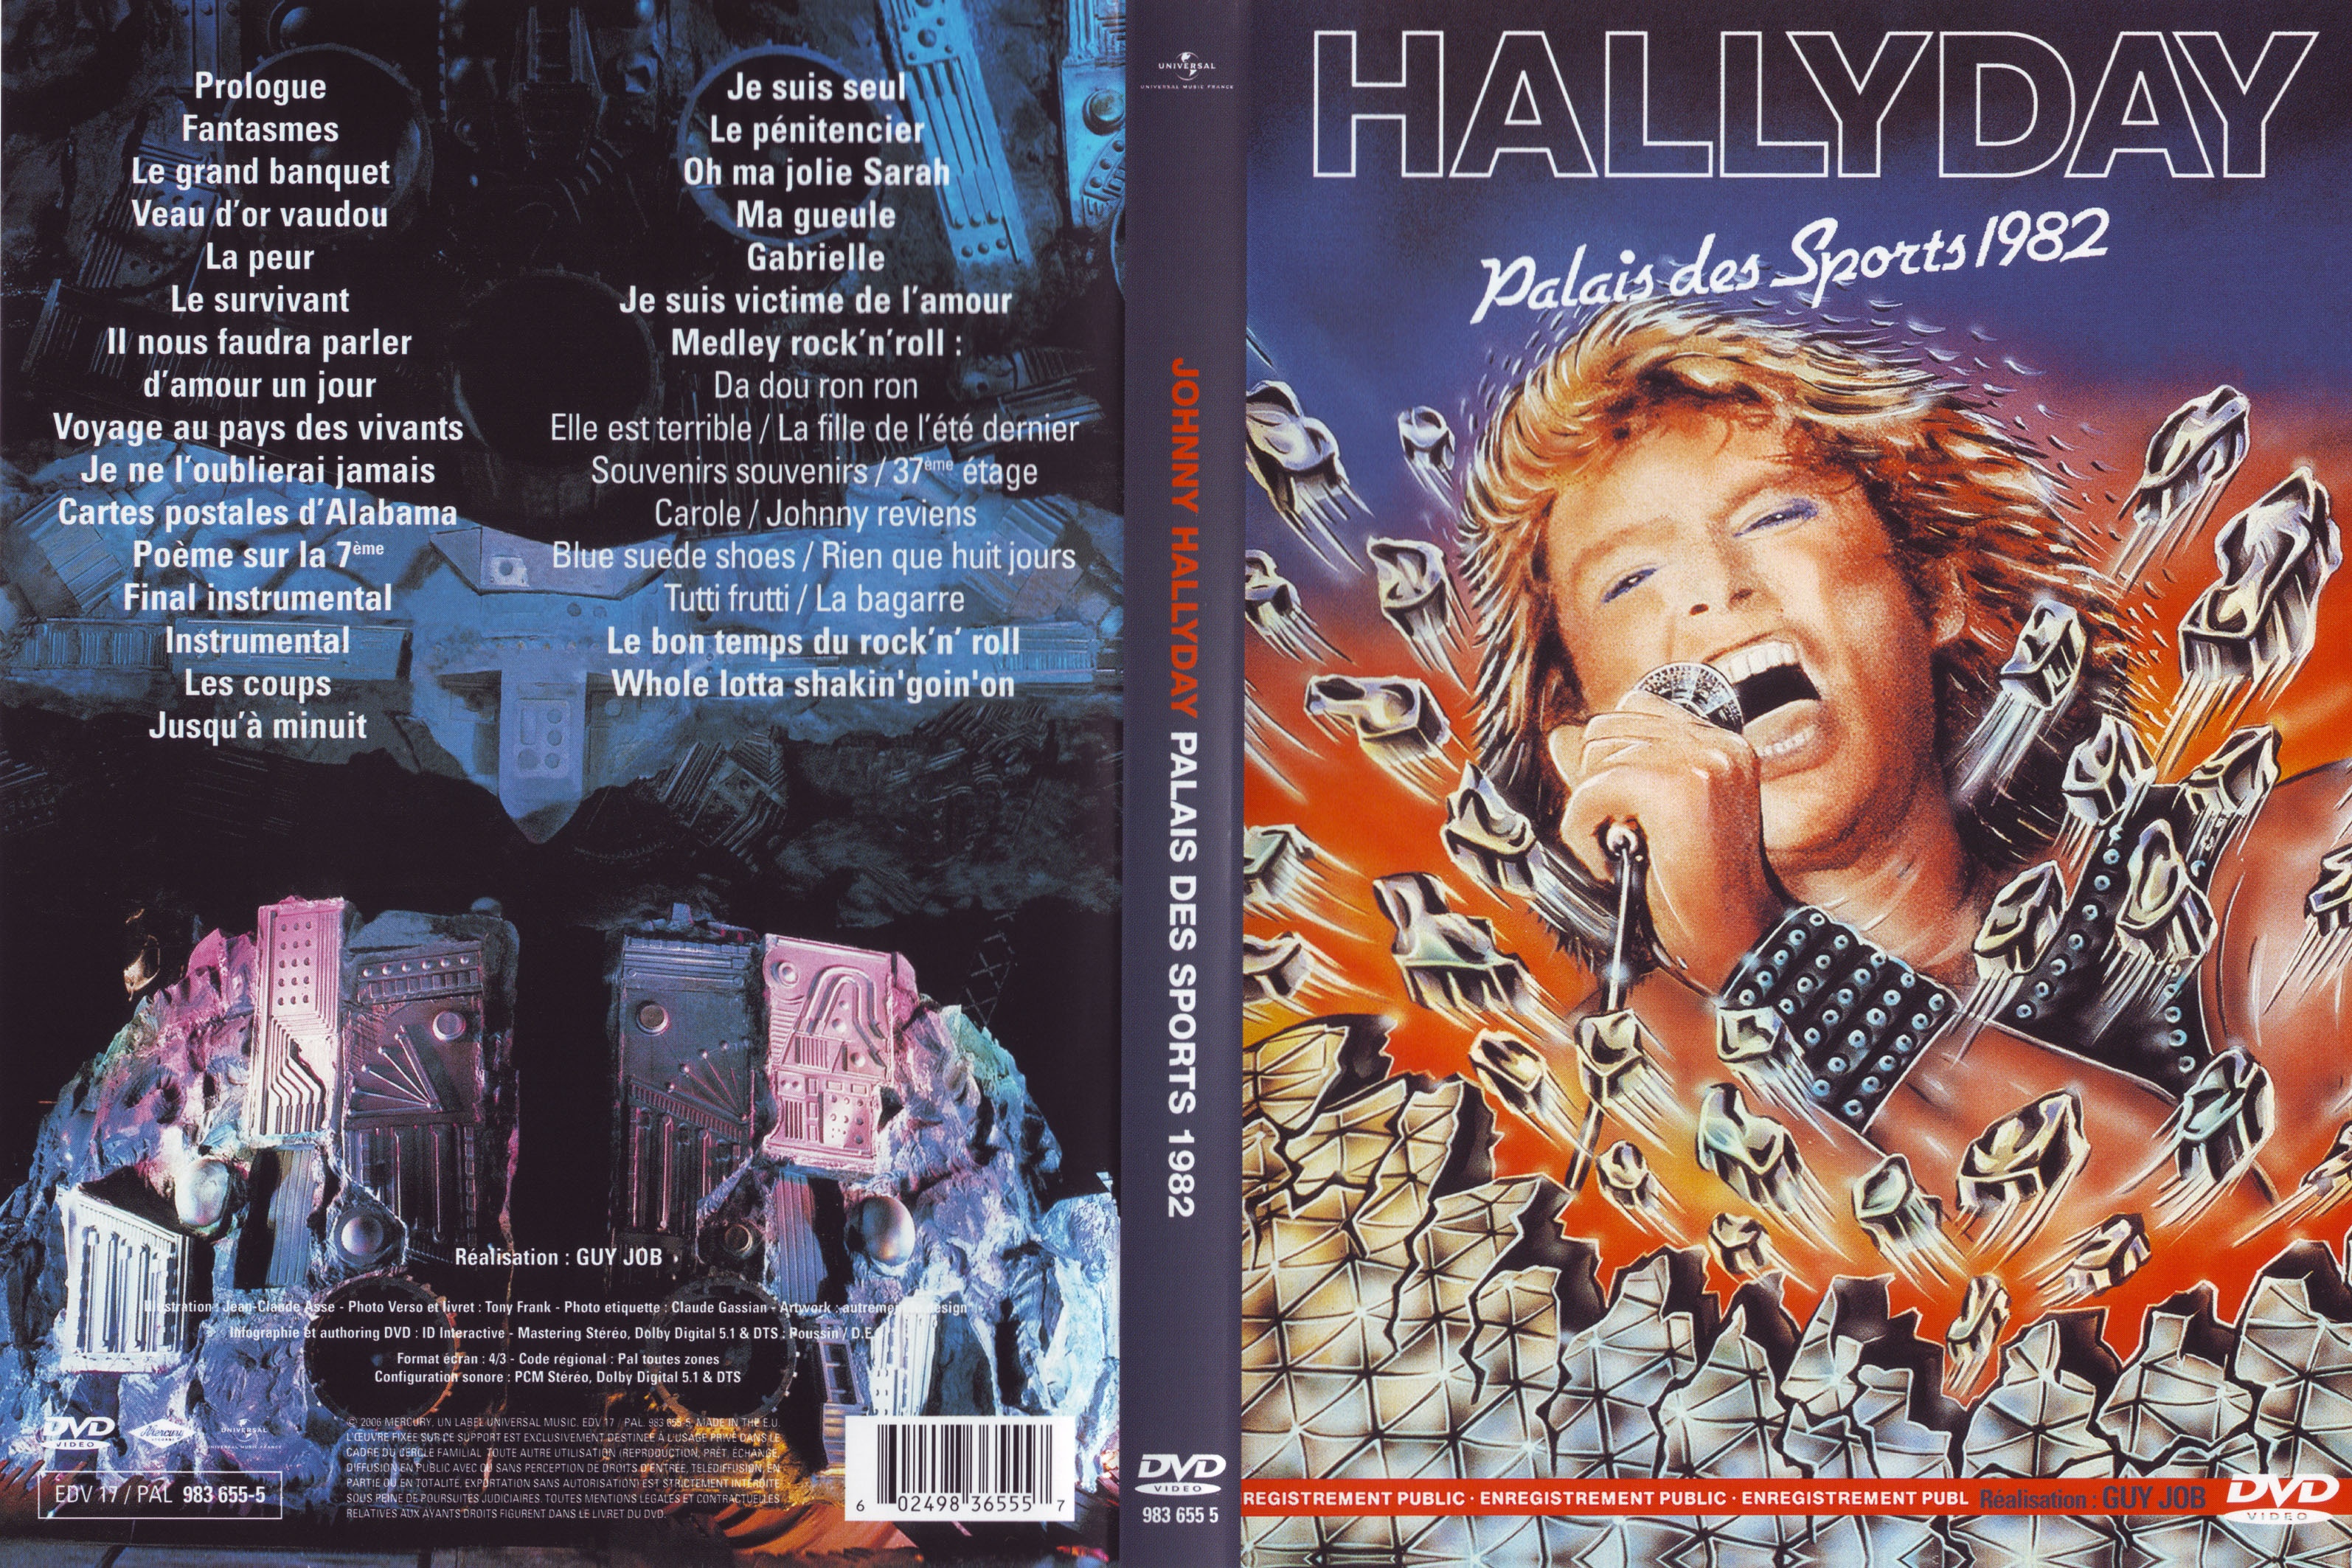 Jaquette DVD Johnny Hallyday Palais des sports 1982